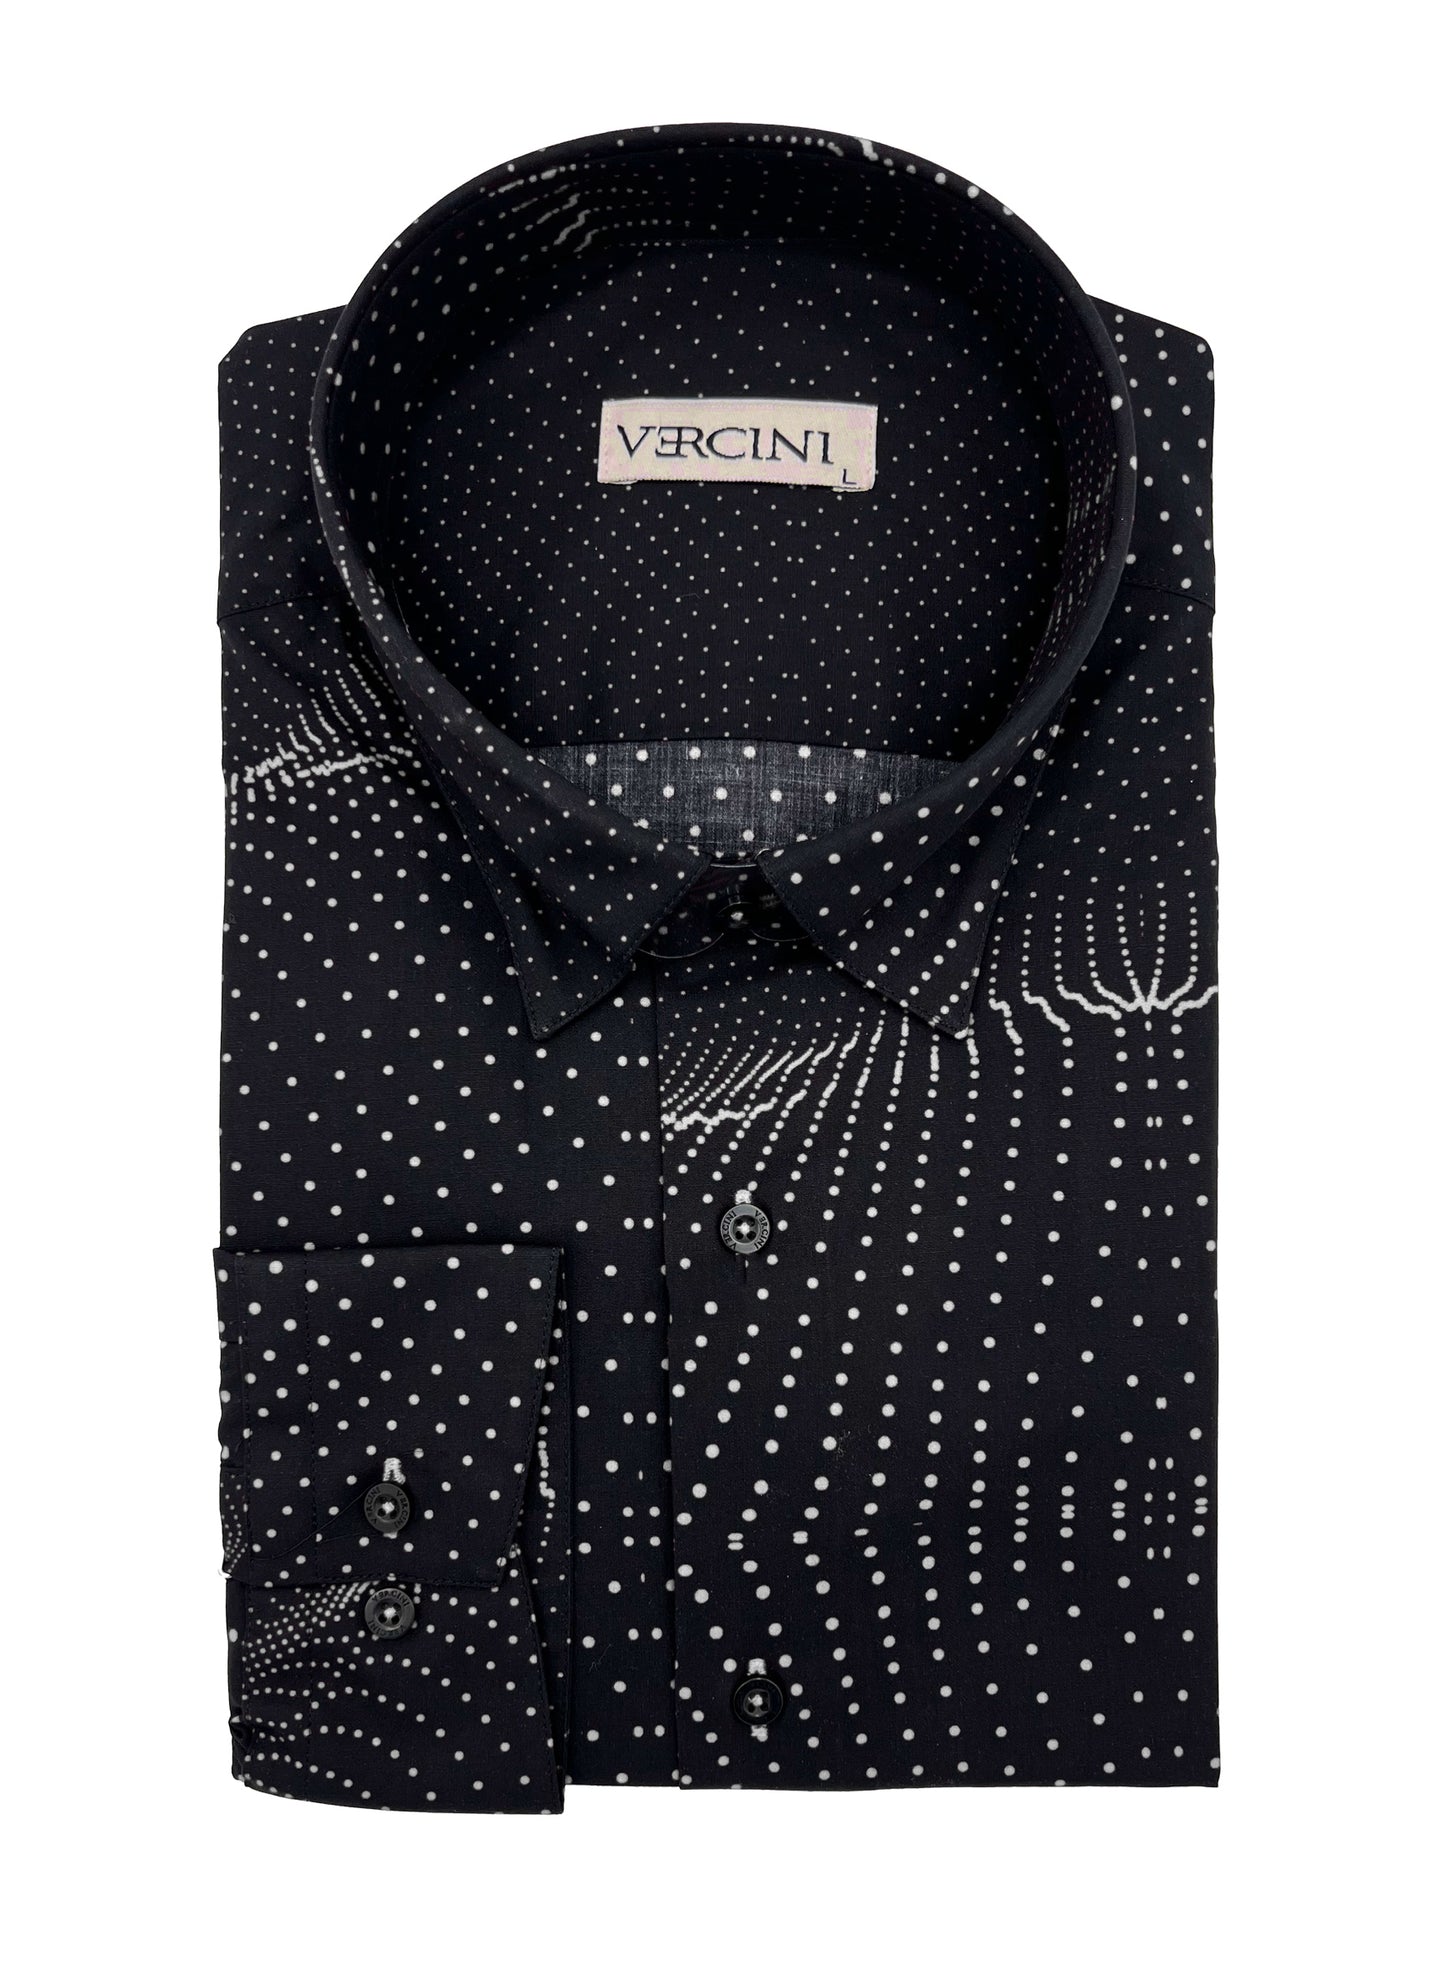 Stellar Pathway Men's Dress Shirt CASUAL SHIRT On Sale 30% Off Vercini